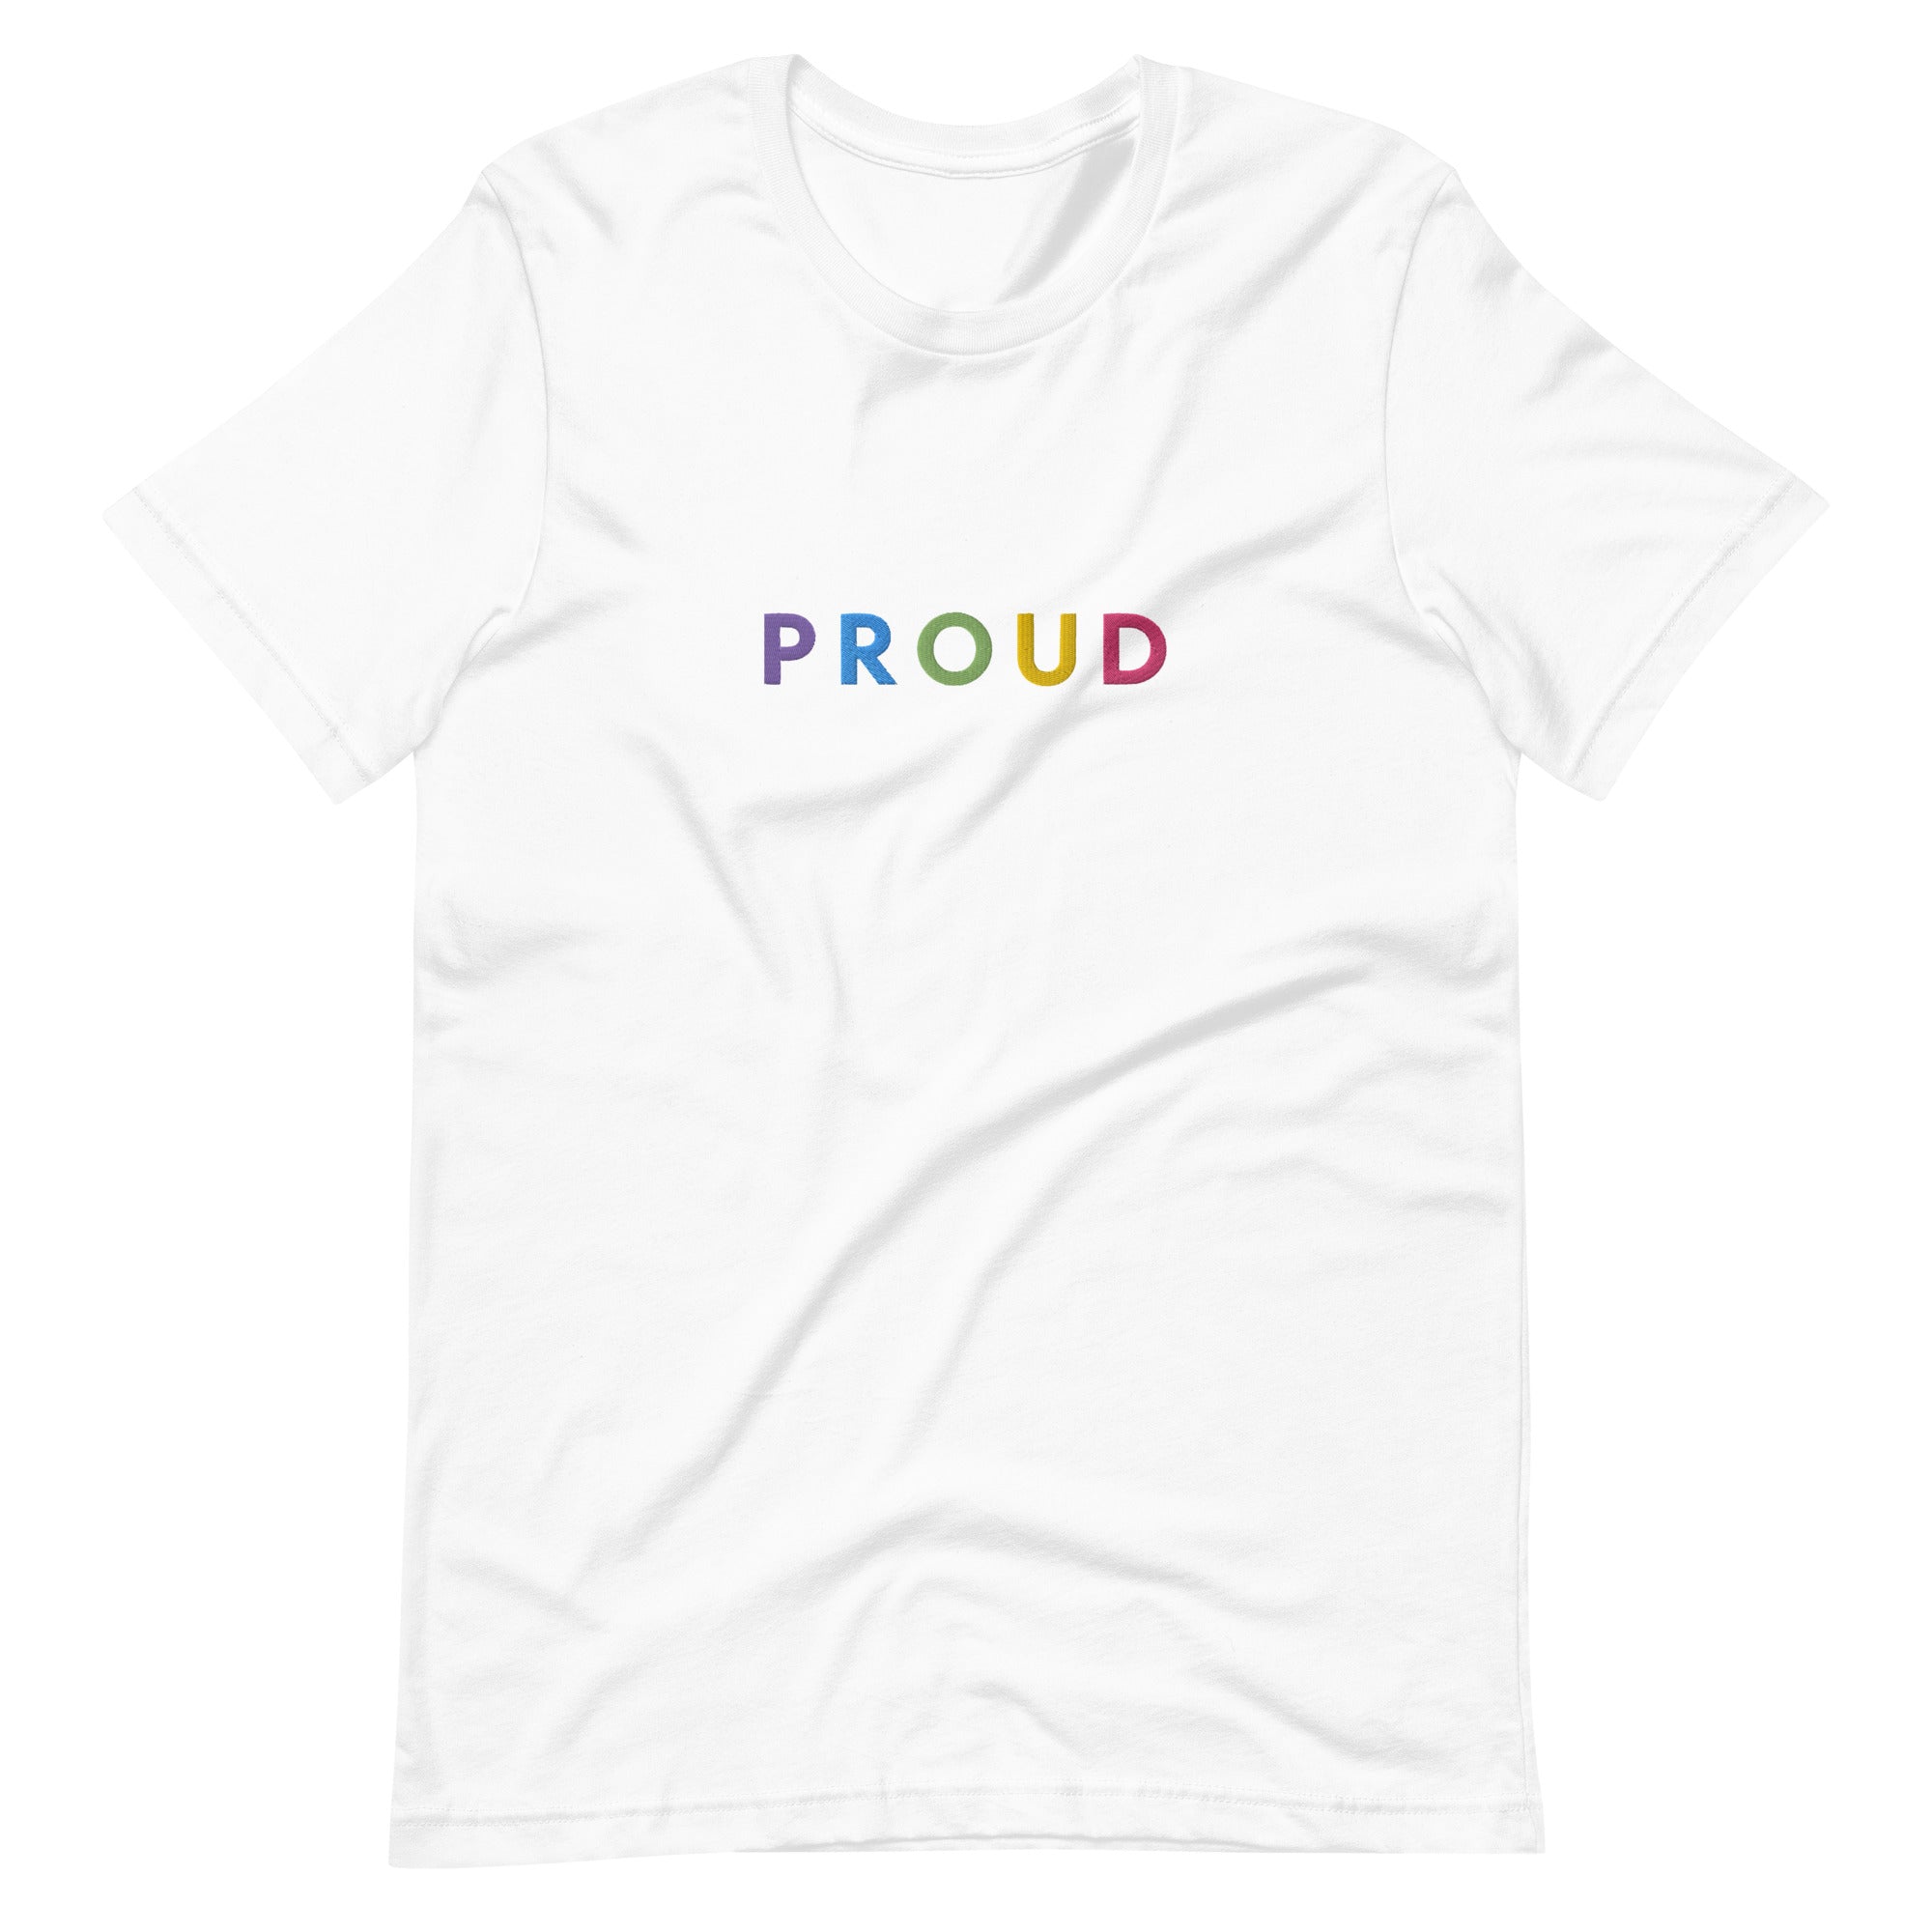 Proud t-shirt